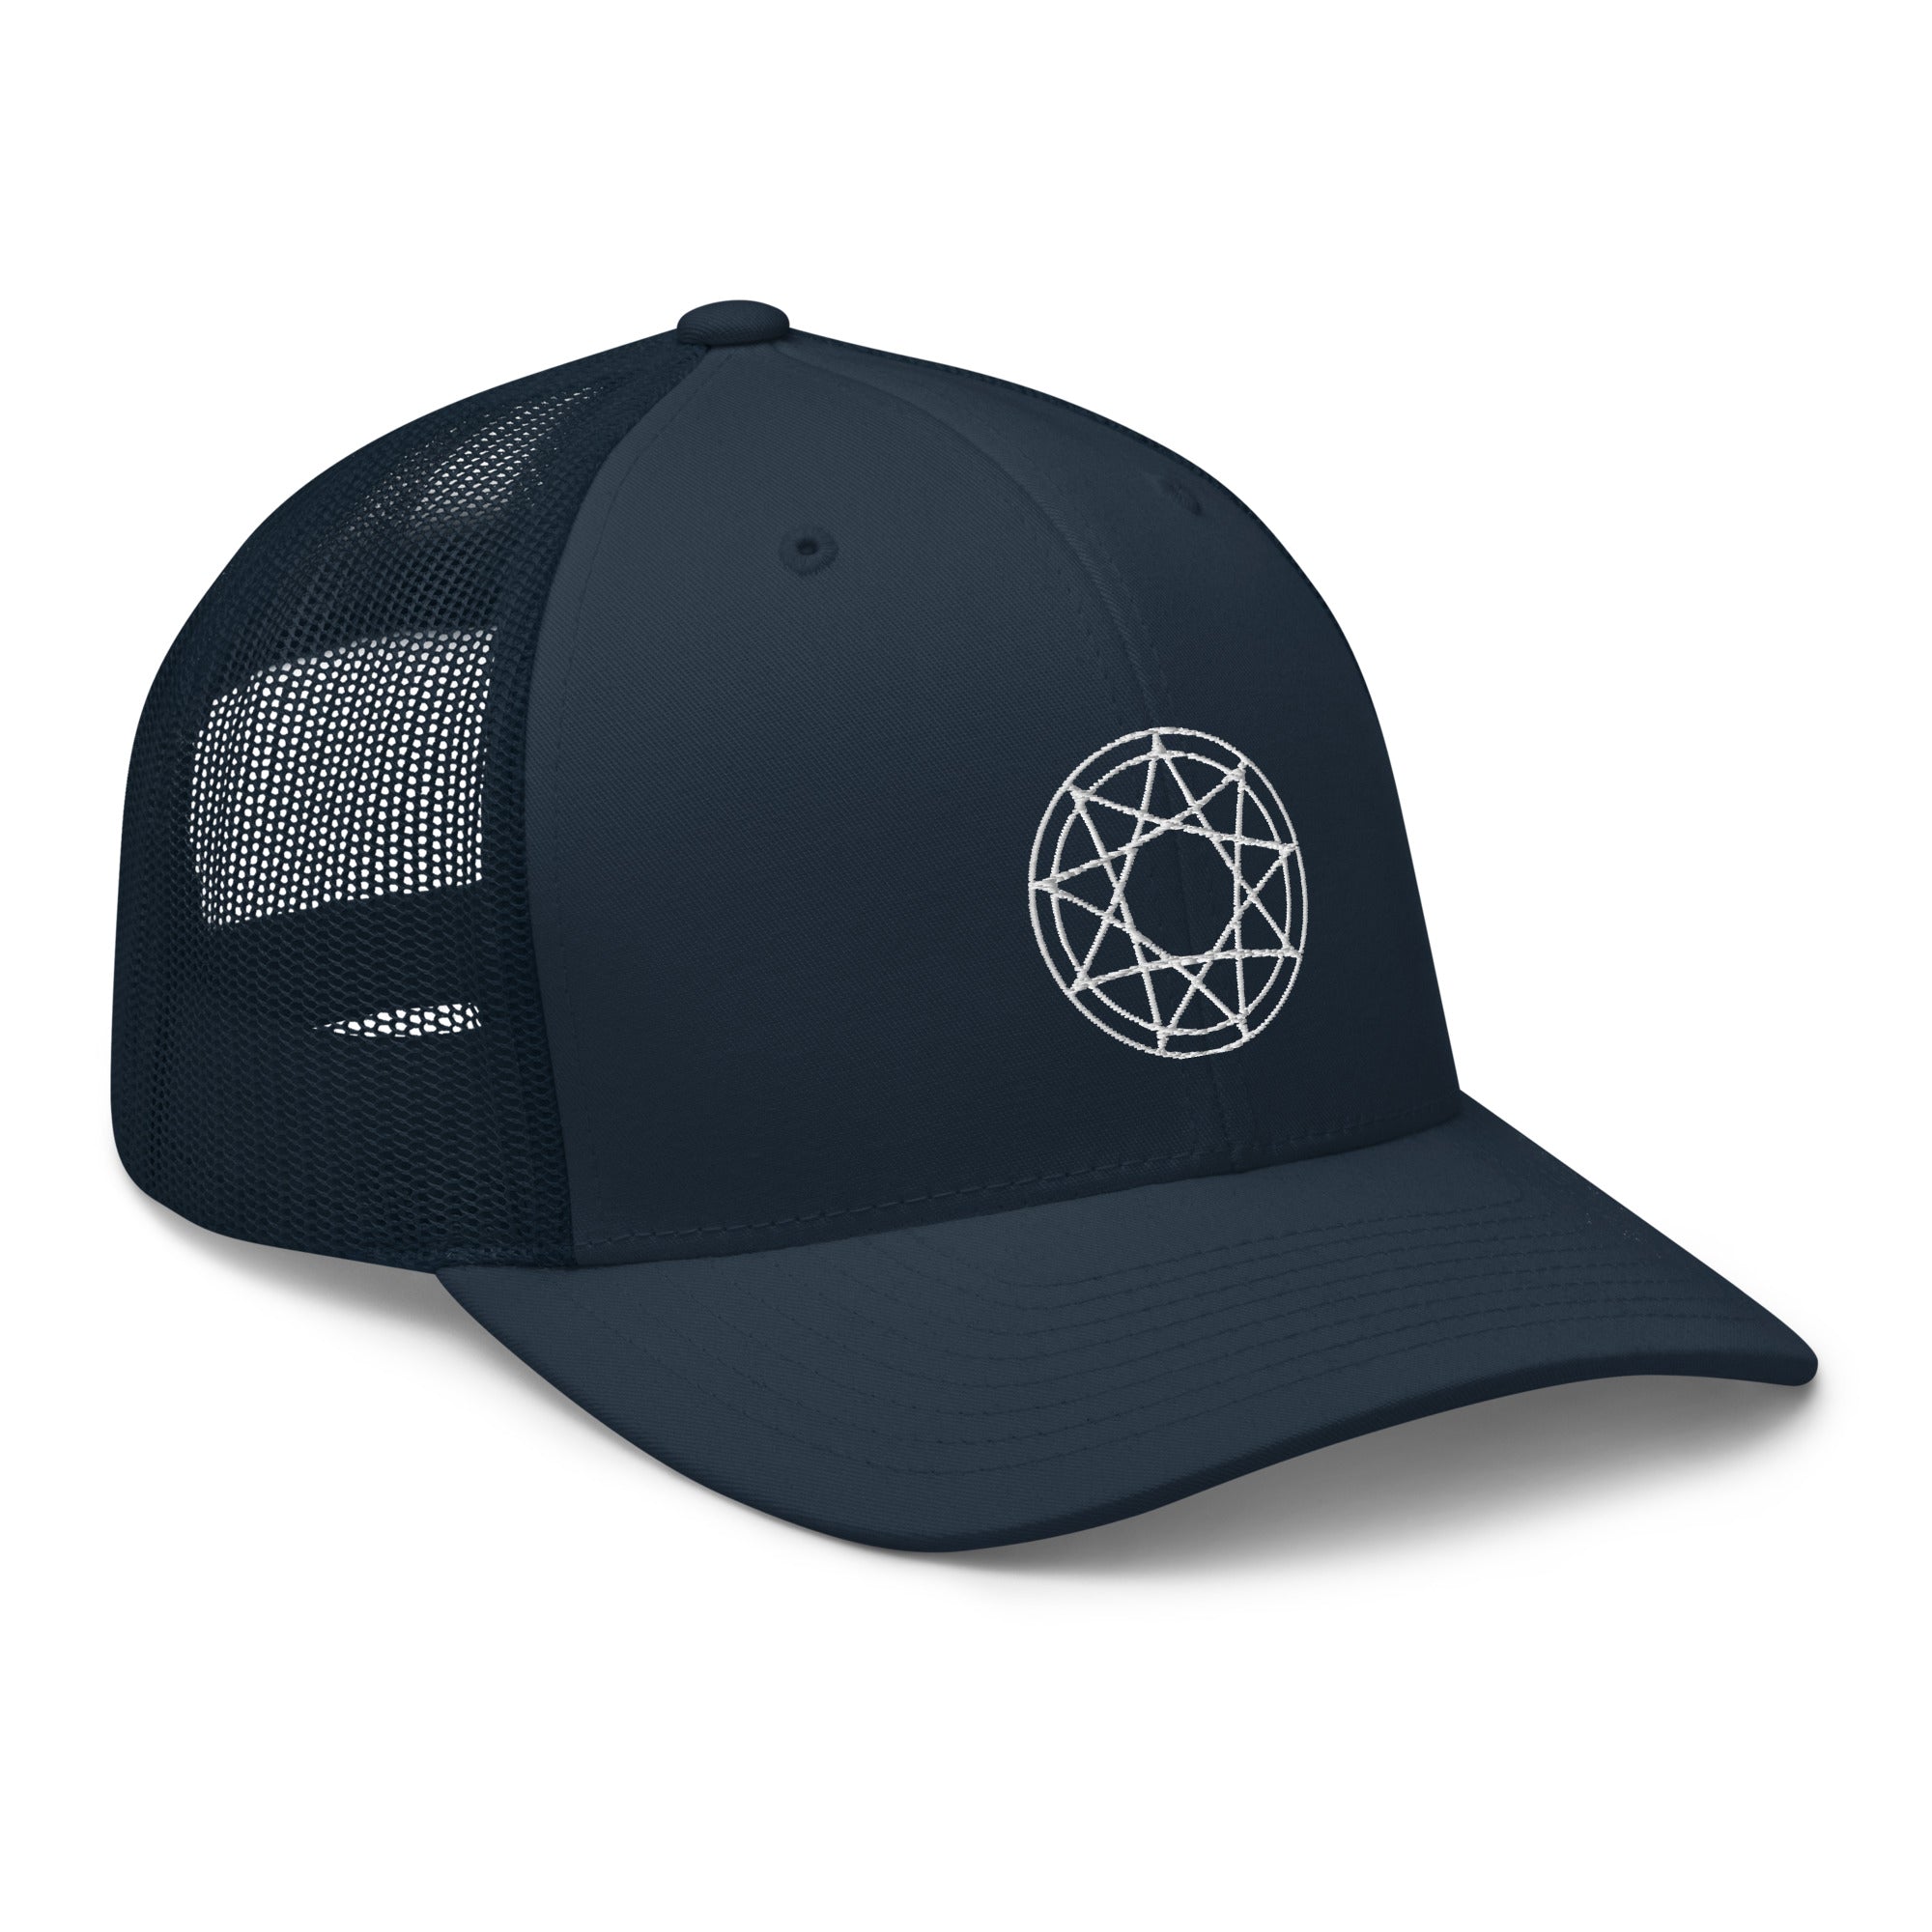 White 9 Point Star Pentagram Occult Symbol Embroidered Retro Trucker Cap Snapback Hat